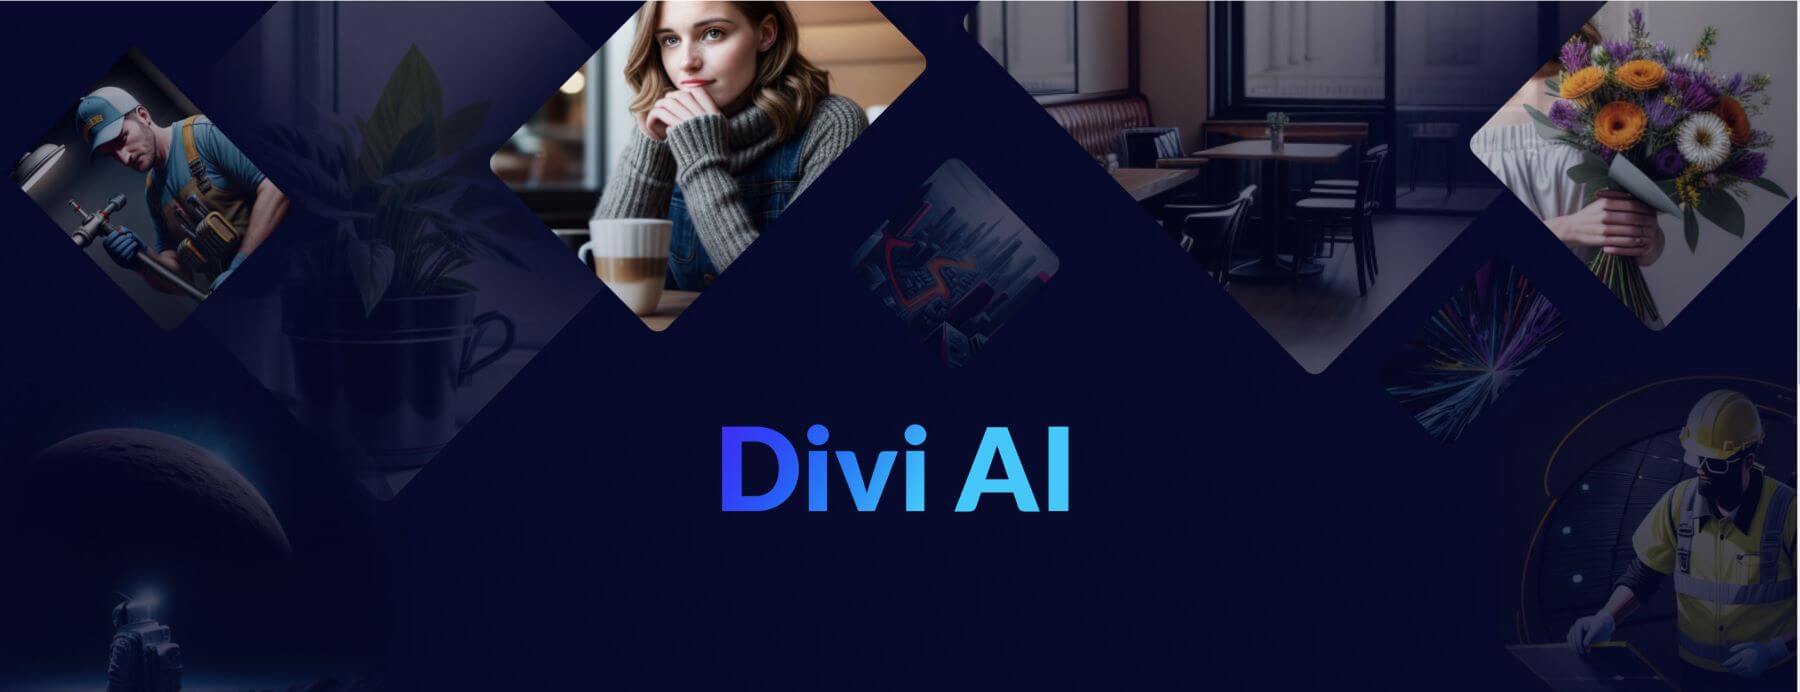 Divi AI 用於圖像和文本生成